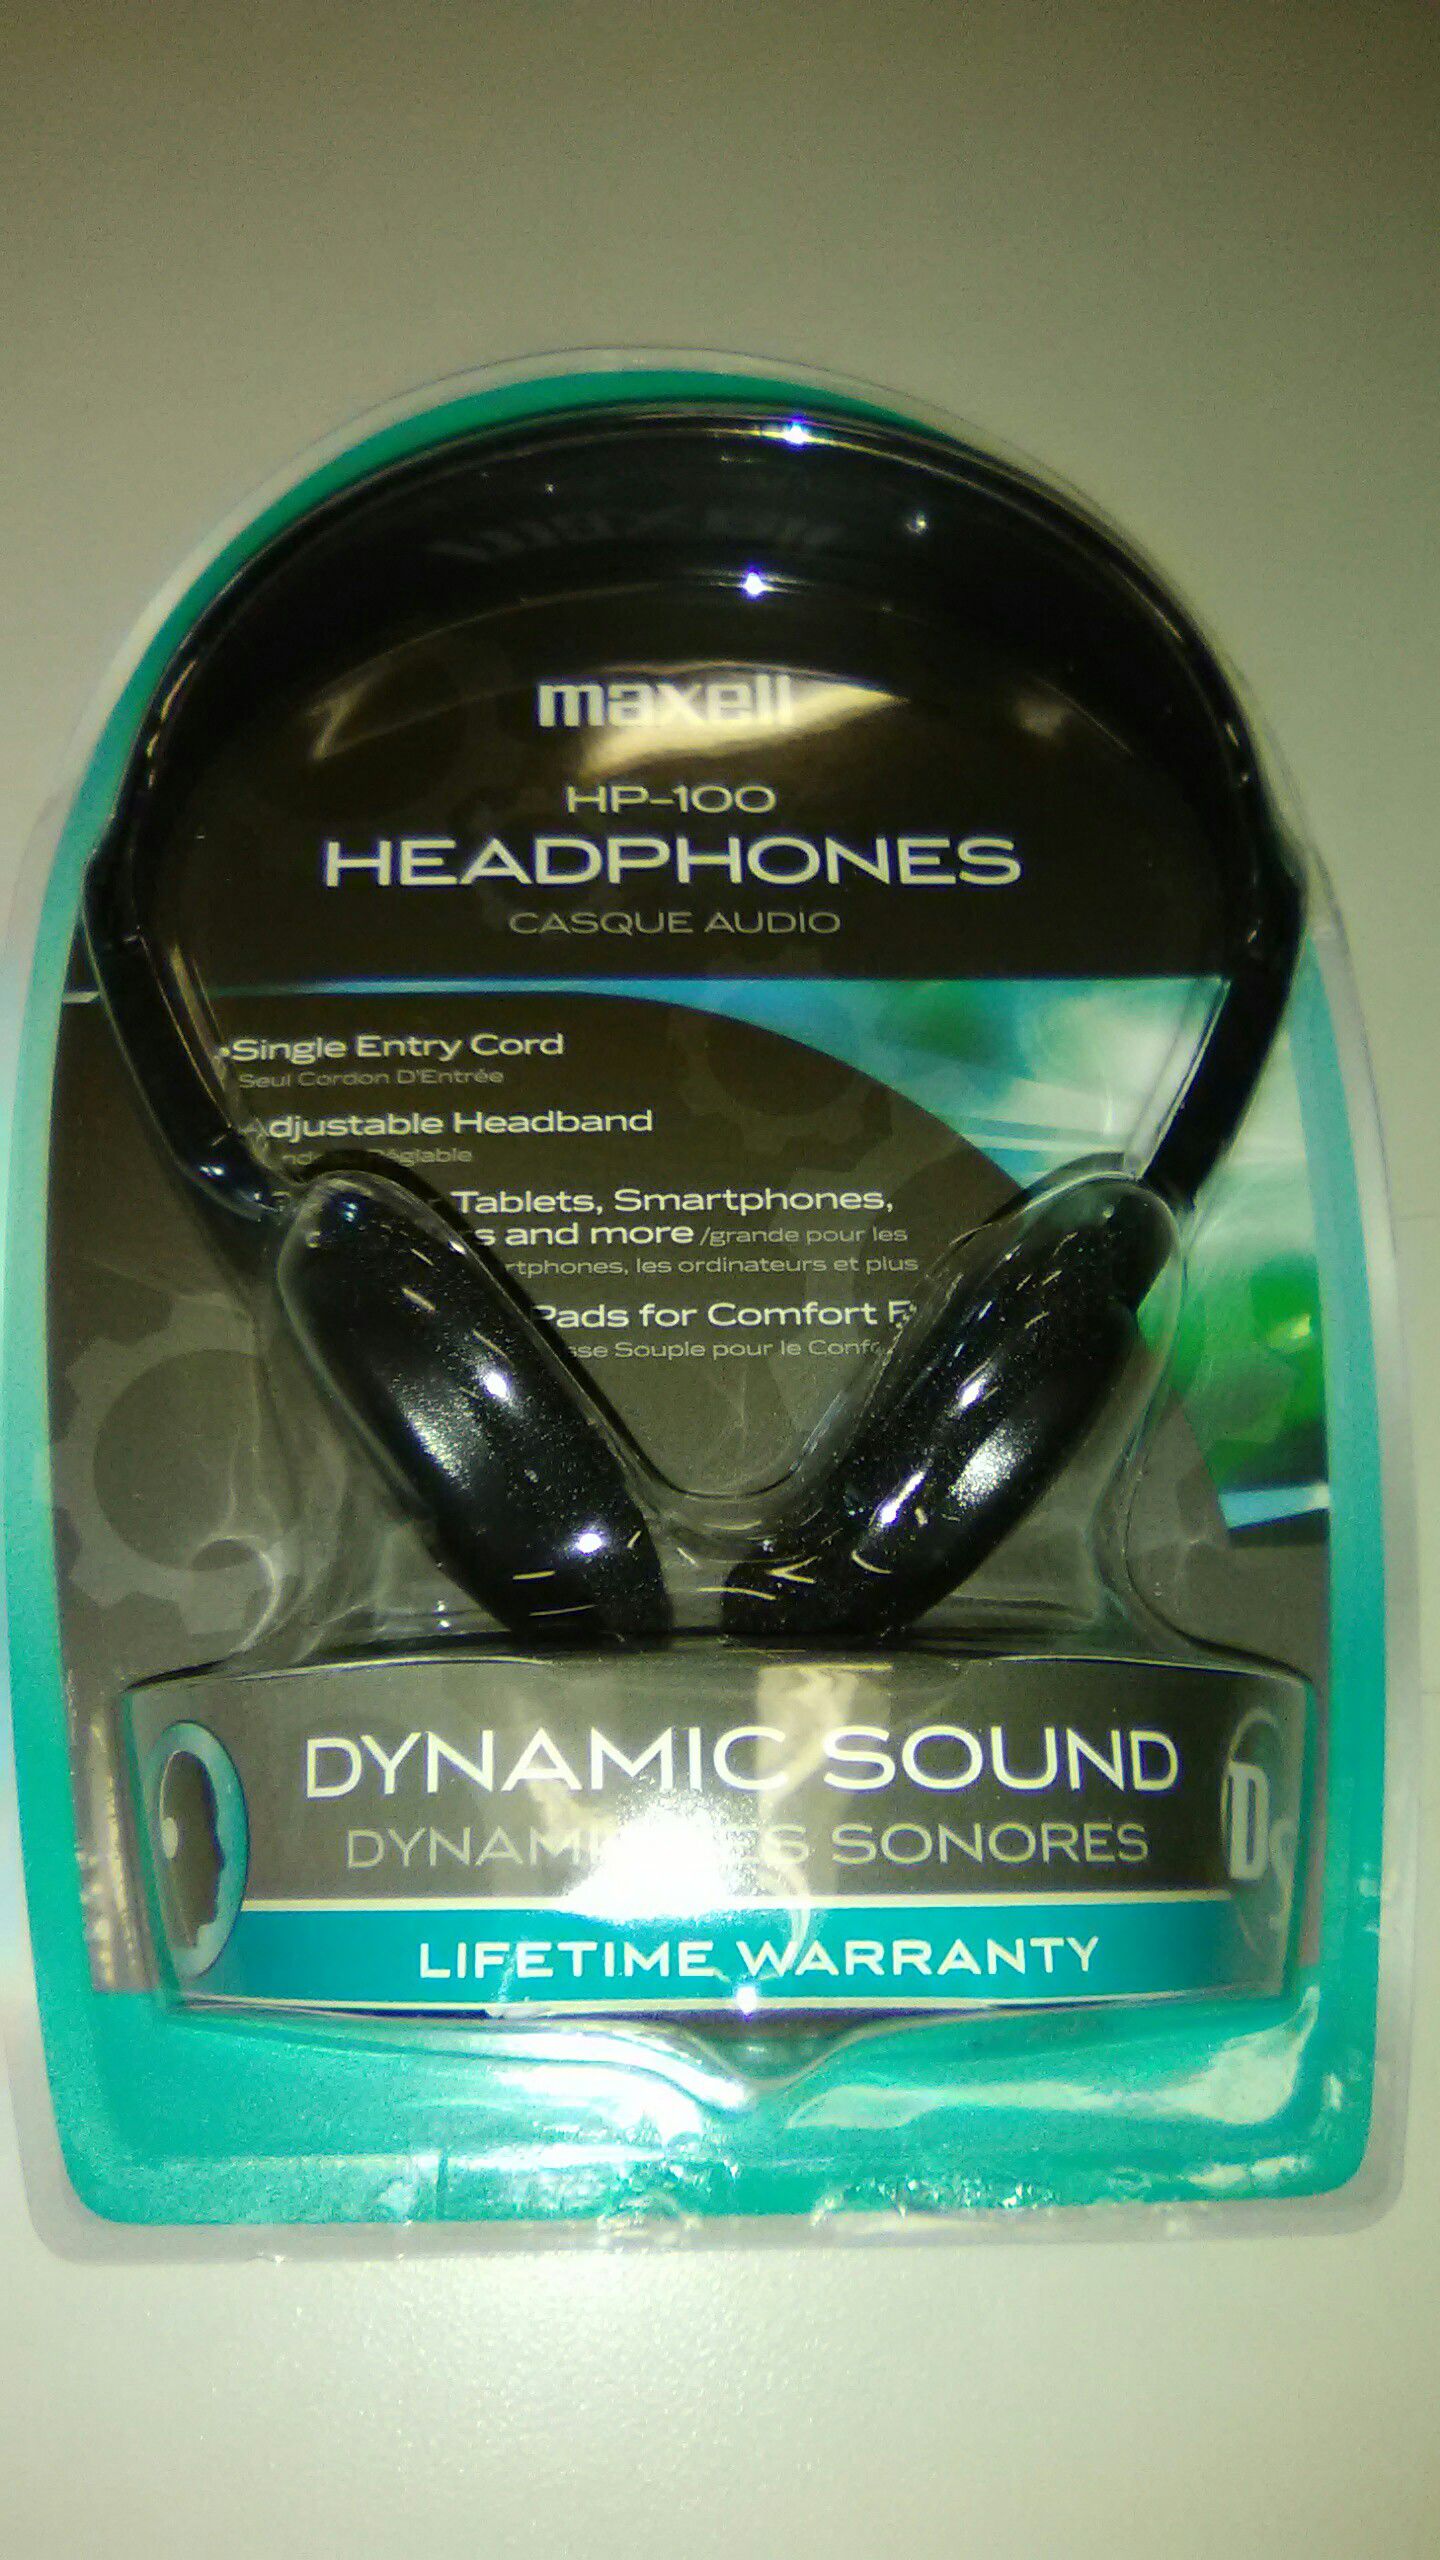 Maxell HP-100 Headphones